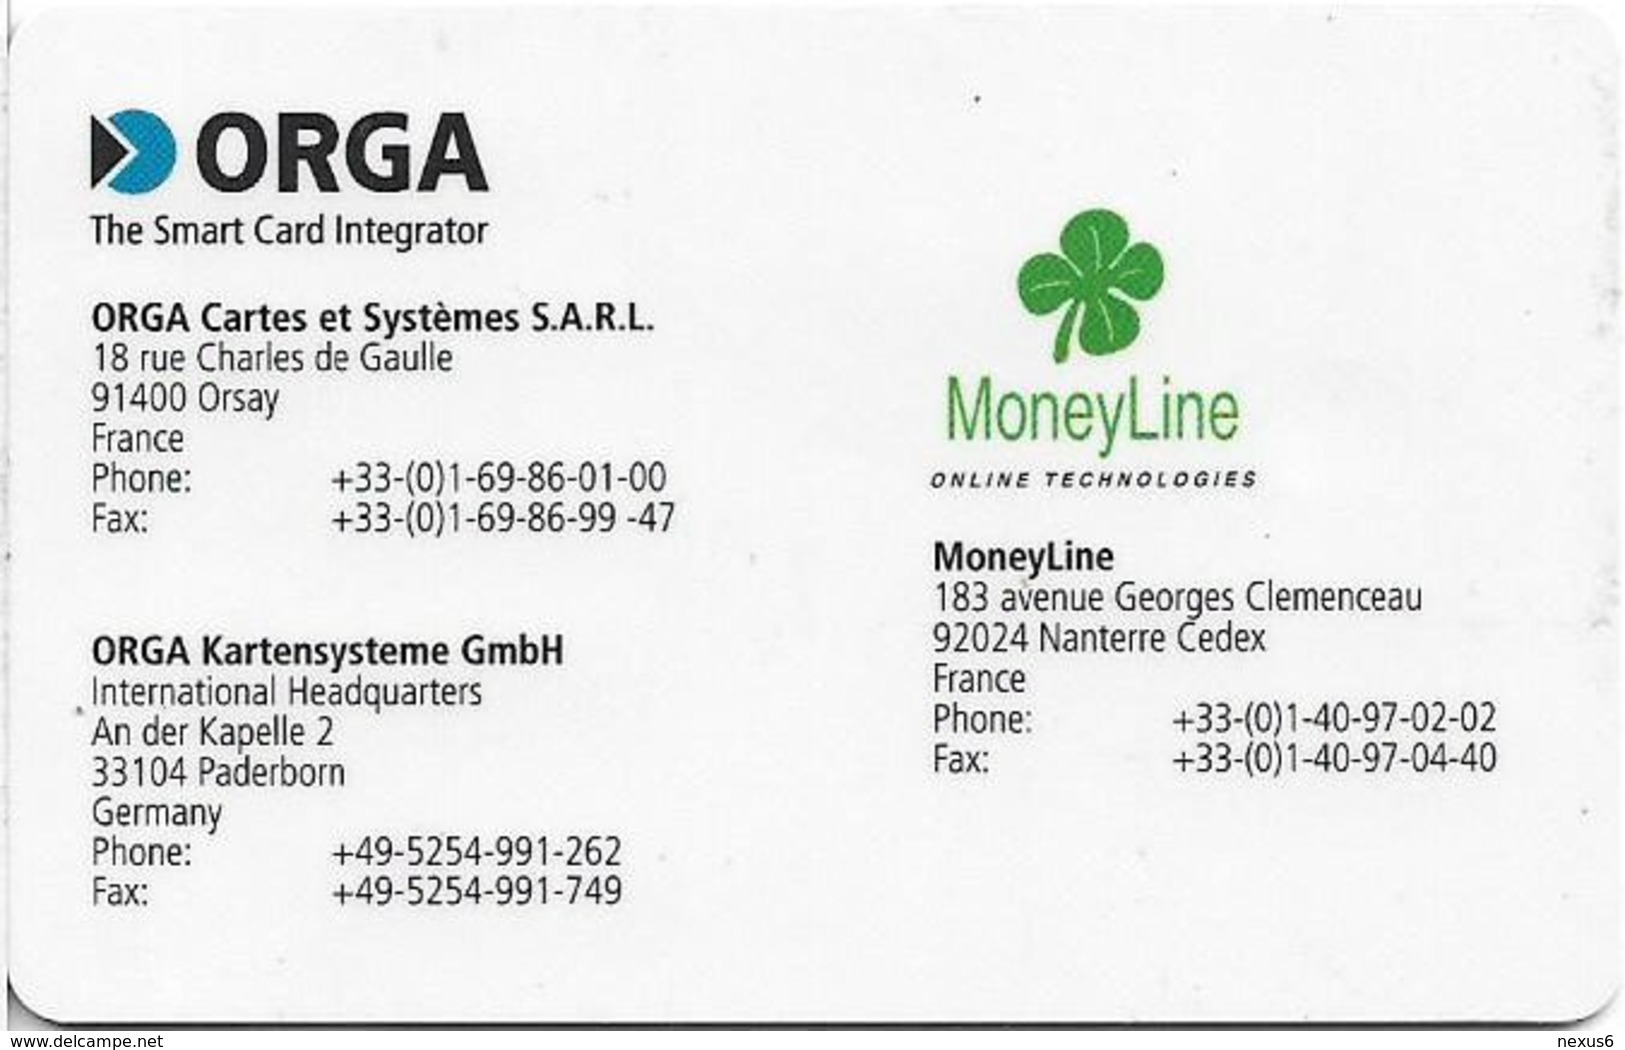 Orga MoneyLine OnLine Technologies Promo - Other & Unclassified